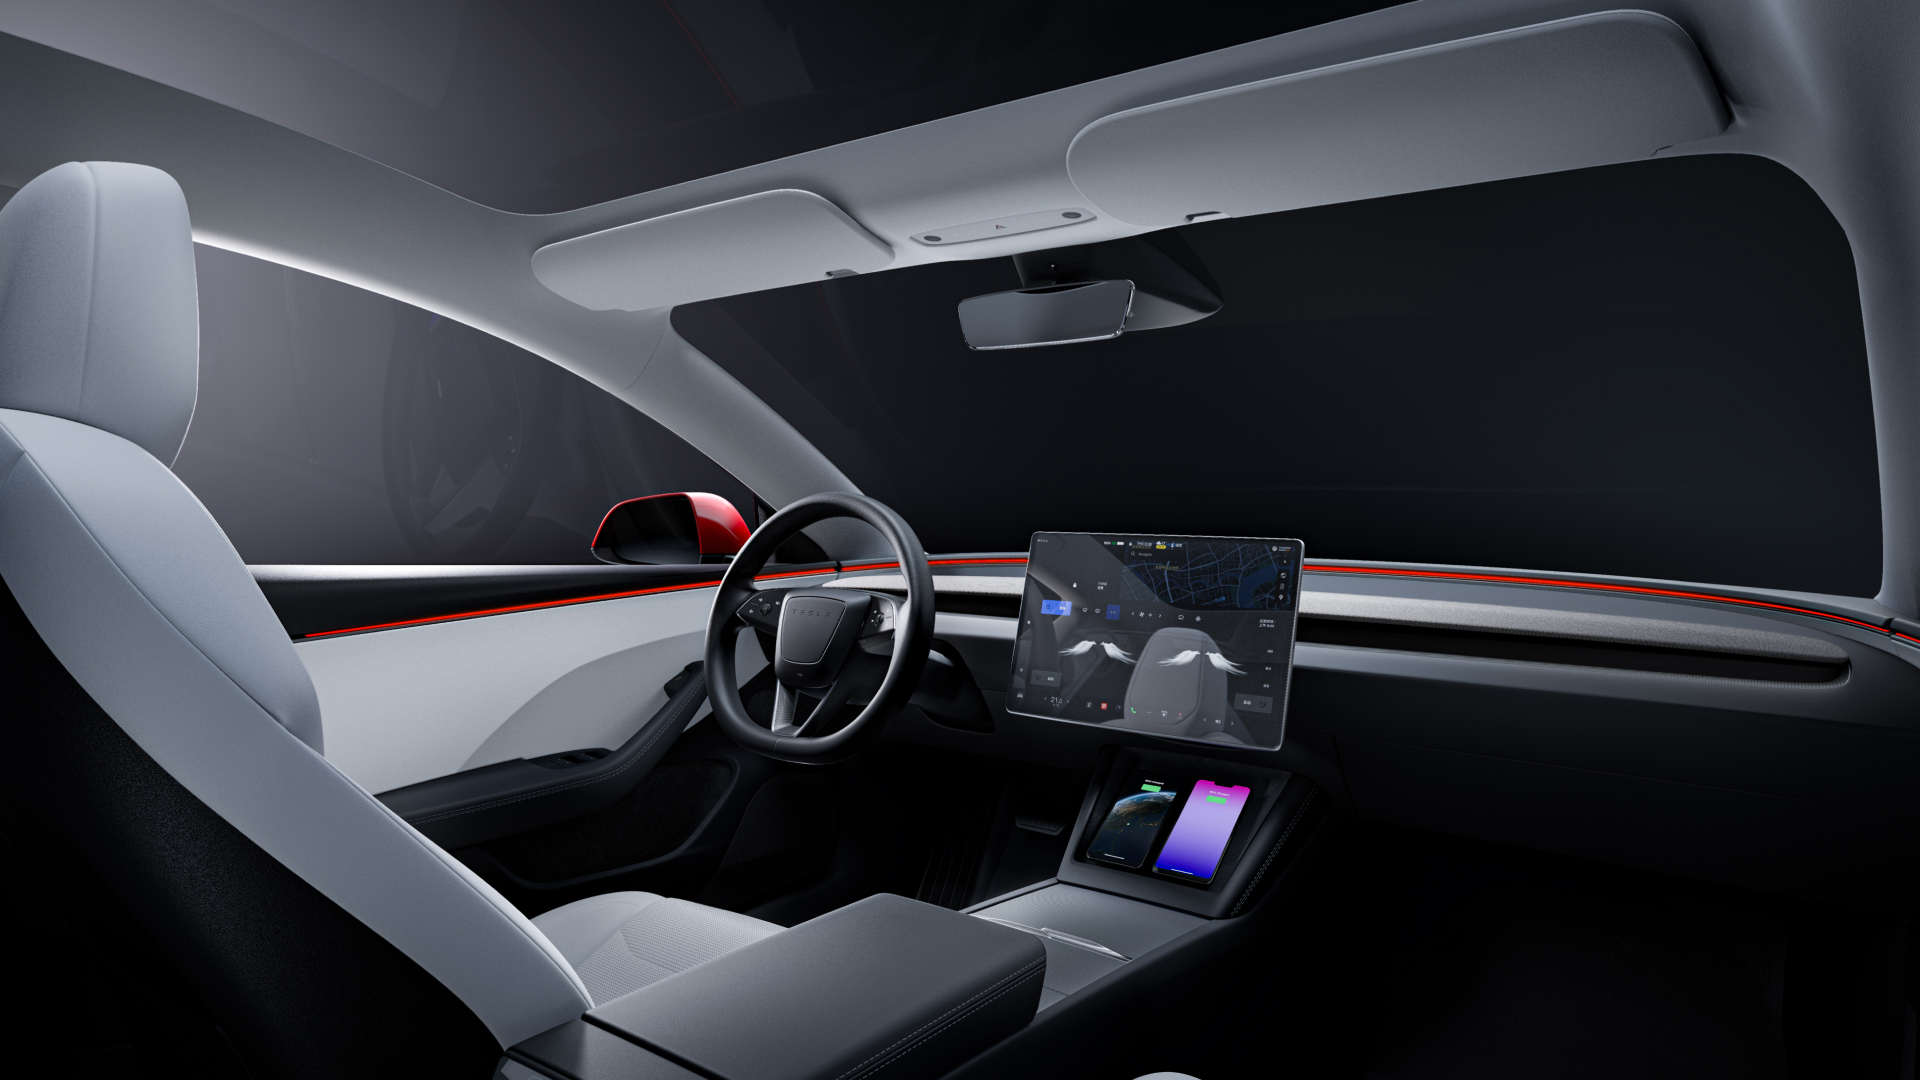 Tesla Model 3 Highland detailed specs, features, and country-wise pricing -  Tesla Oracle, tesla model 3 highlander 